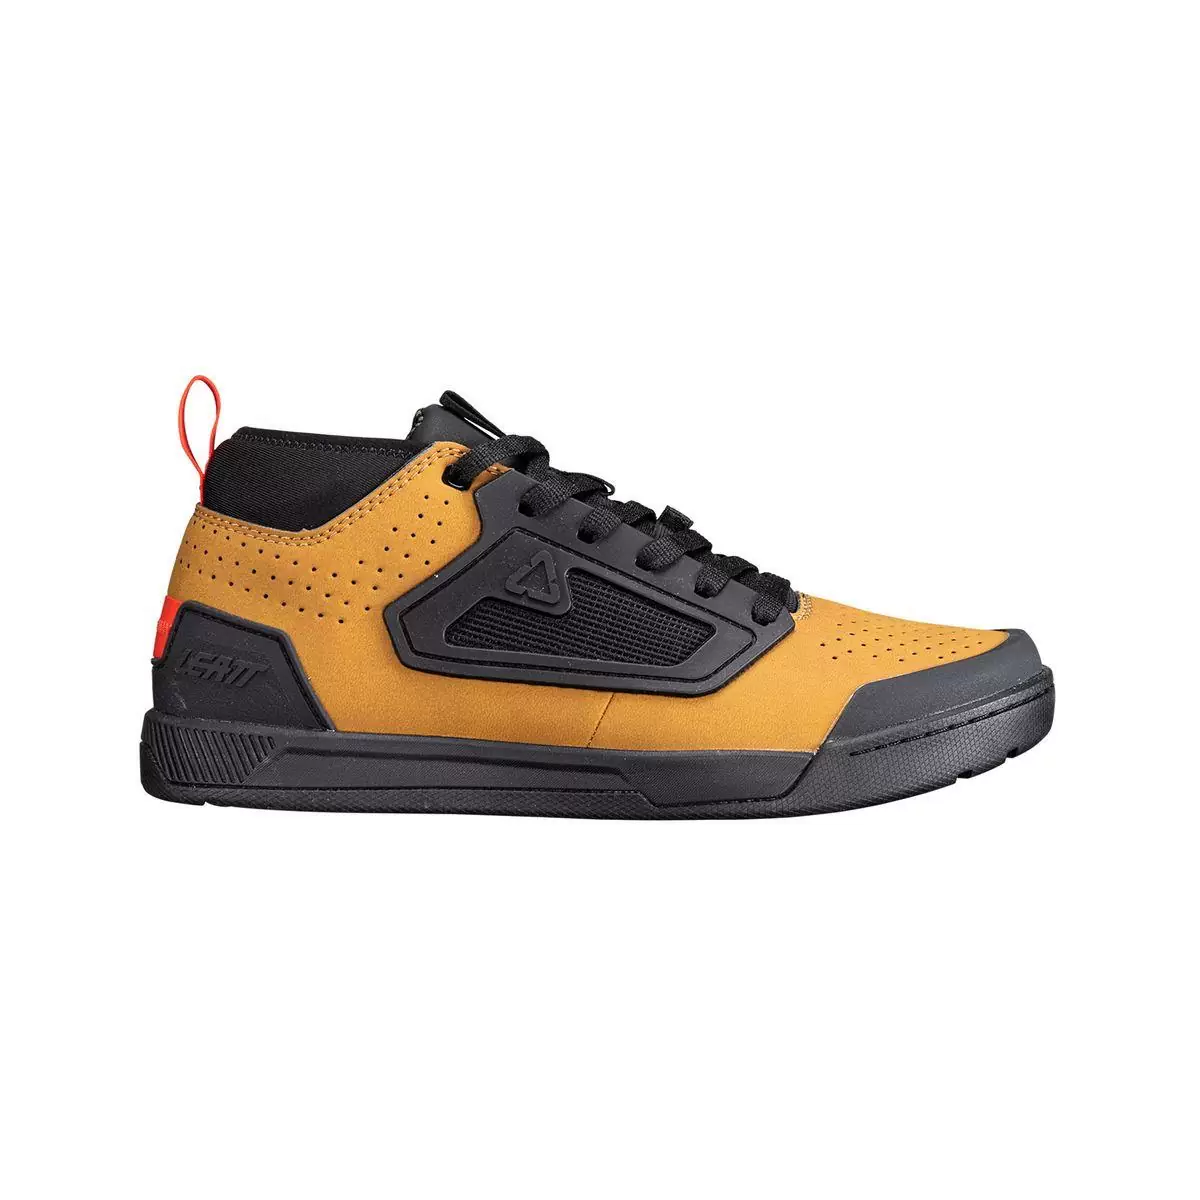 MTB Flat 3.0 Shoes Brown/Black Size 48.5 #1